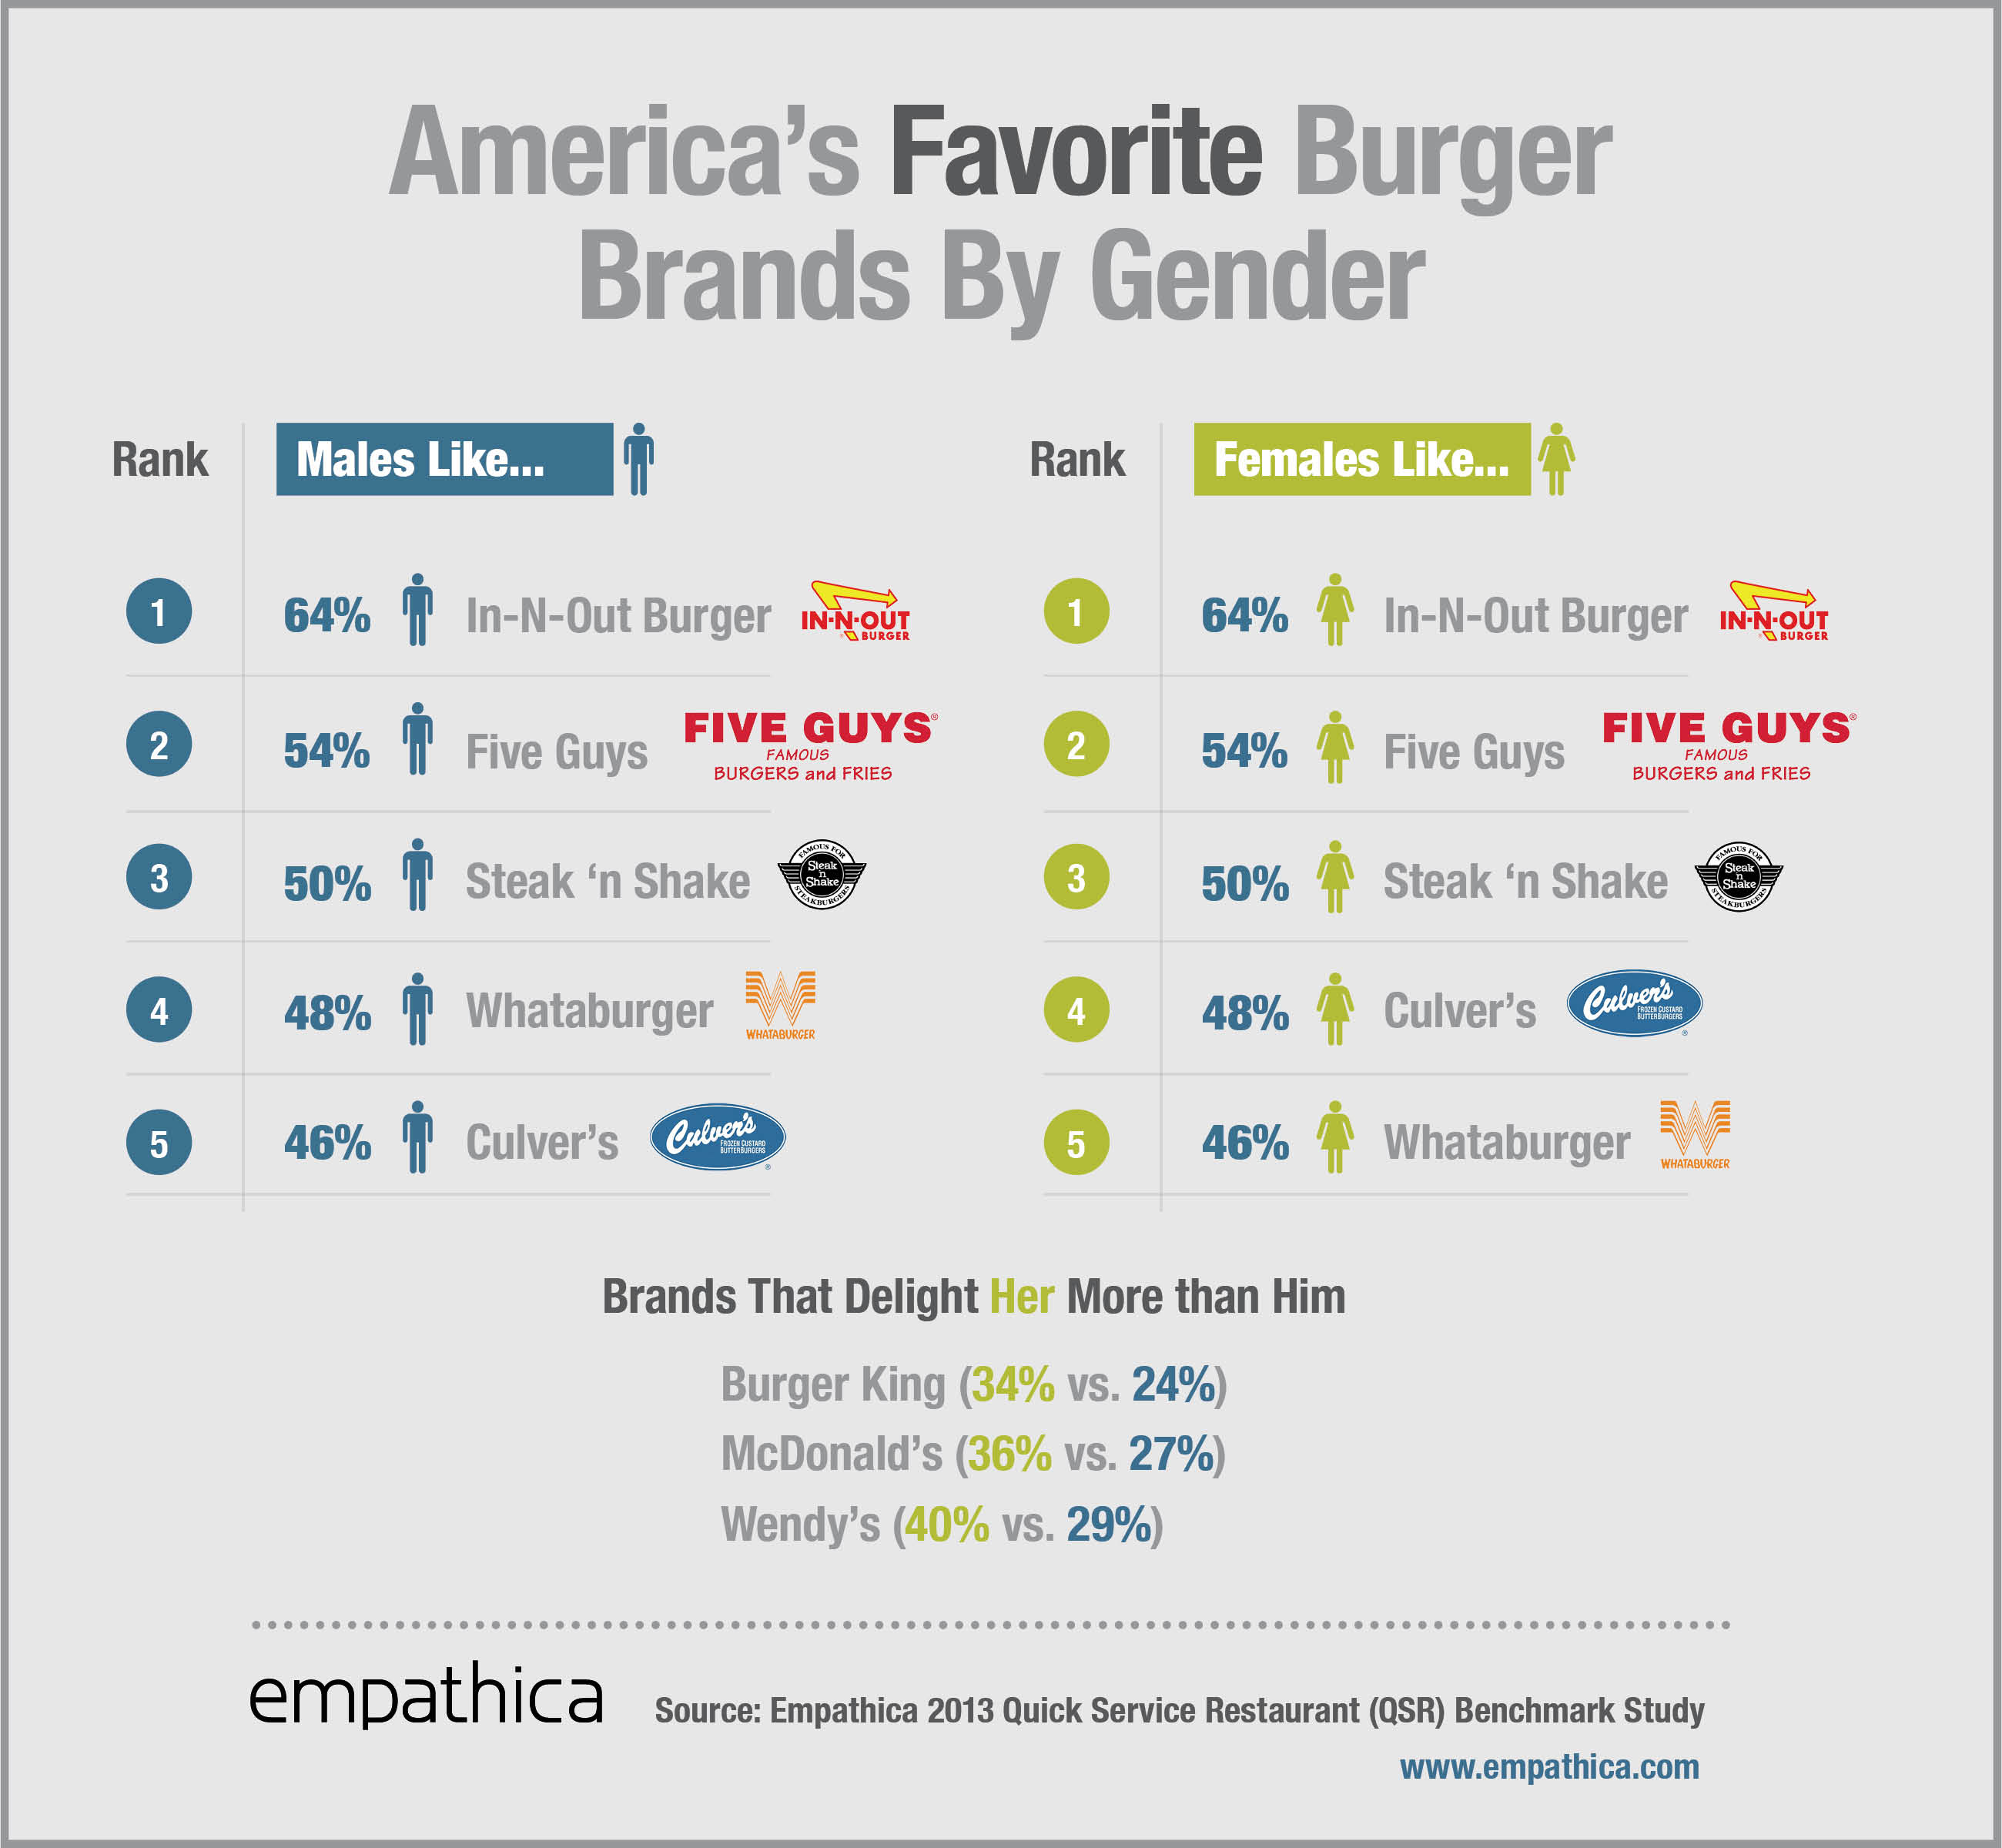 America's Favorite Burger Brands by Gender